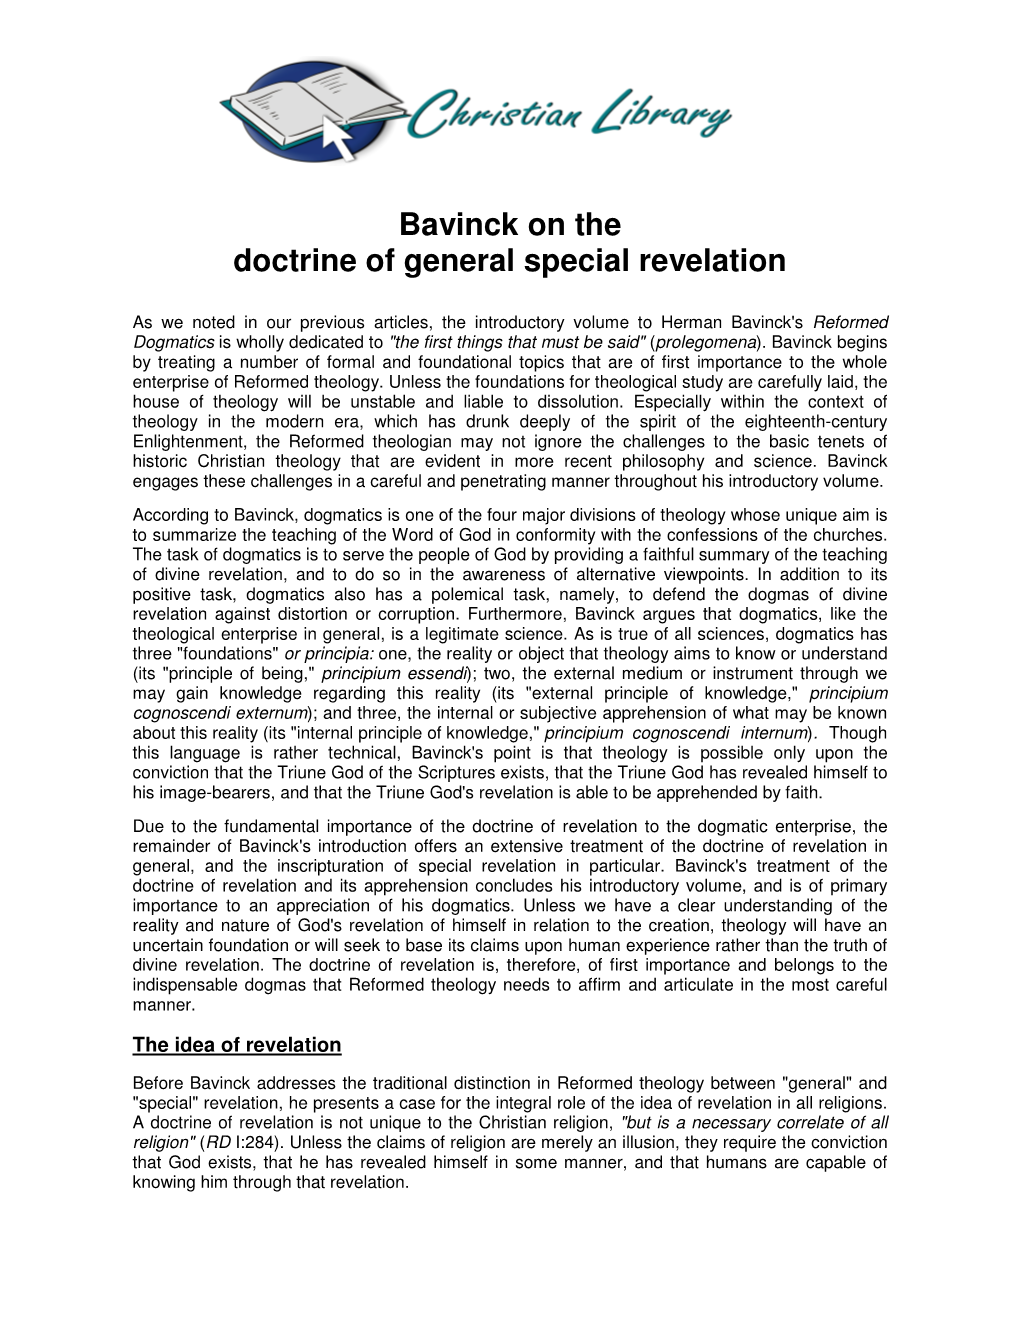 Bavinck on the Doctrine of General Special Revelation